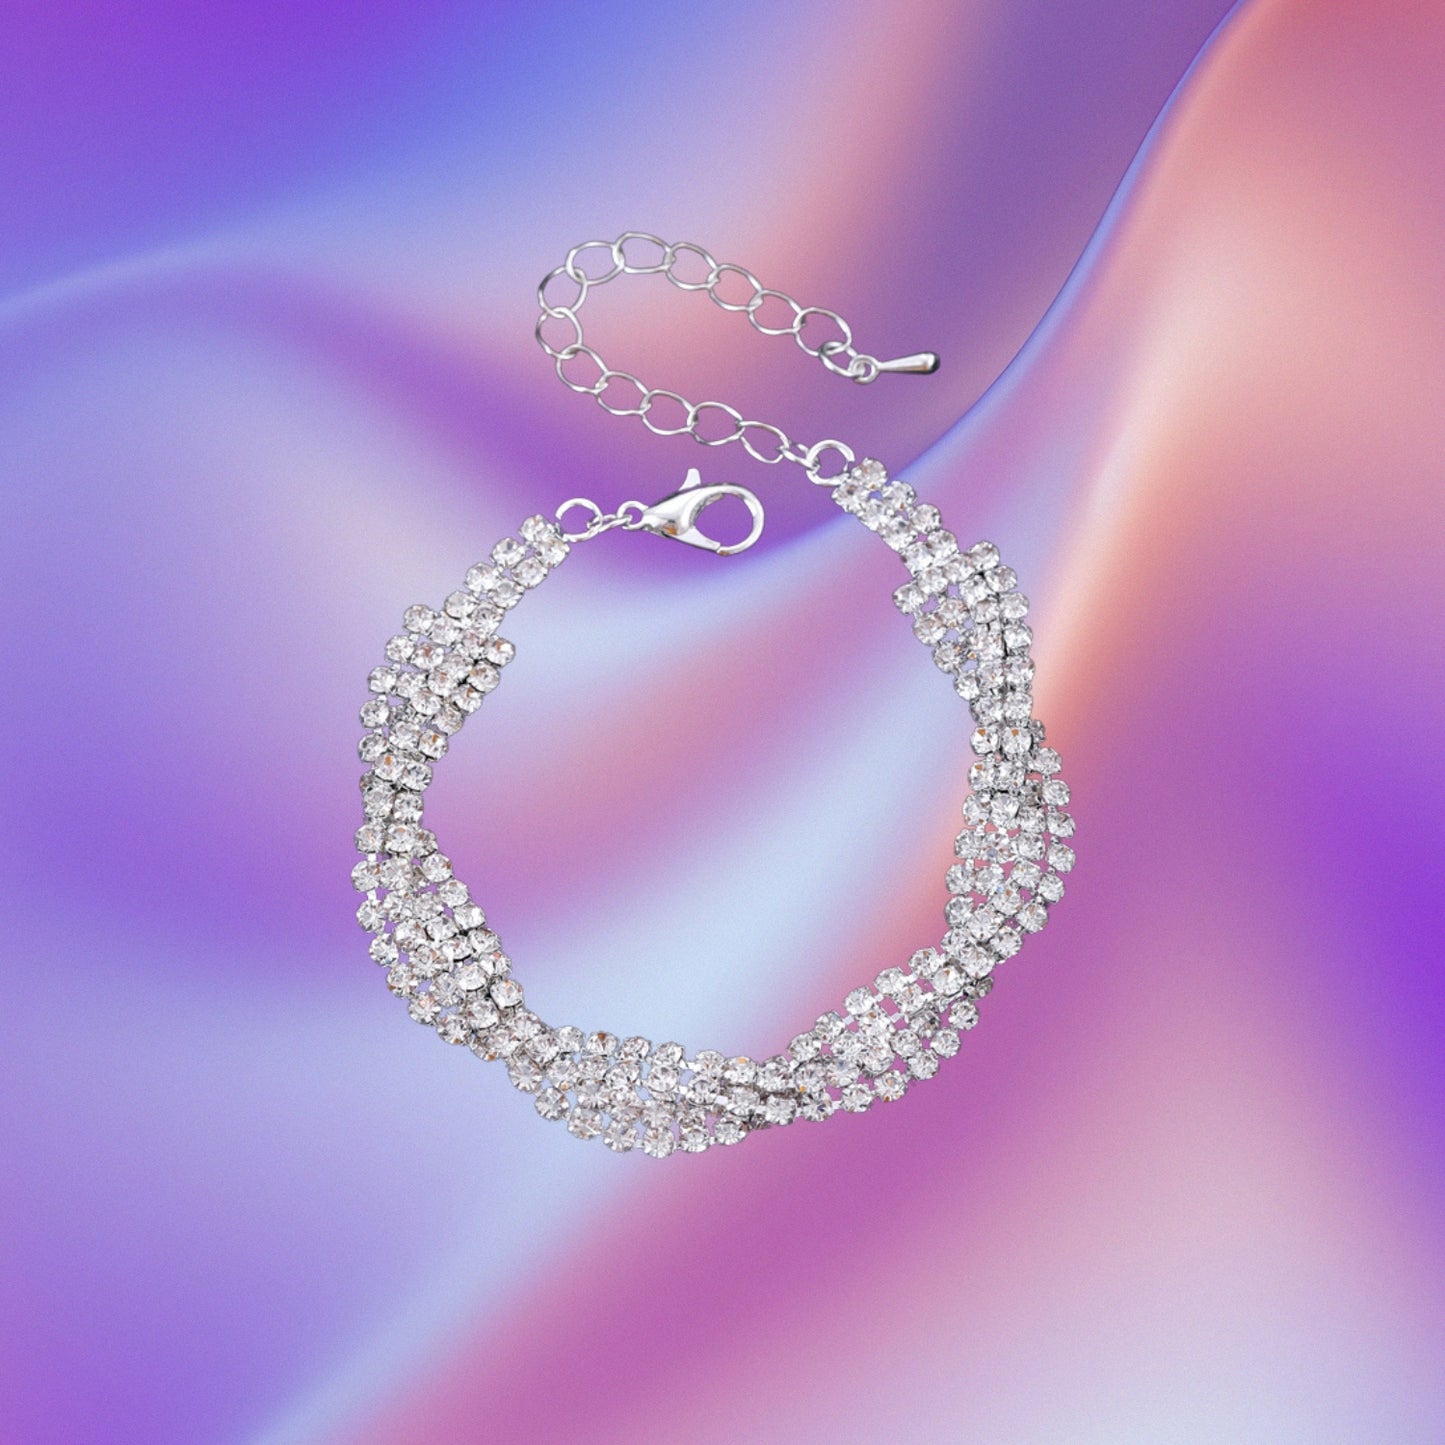 Bracelet for Brides, Bridesmaids, Crystal Bridal Bracelet for Wedding Jewelry, Rhinestone Cubic Zirconia Tennis Bracelets for Women Prom